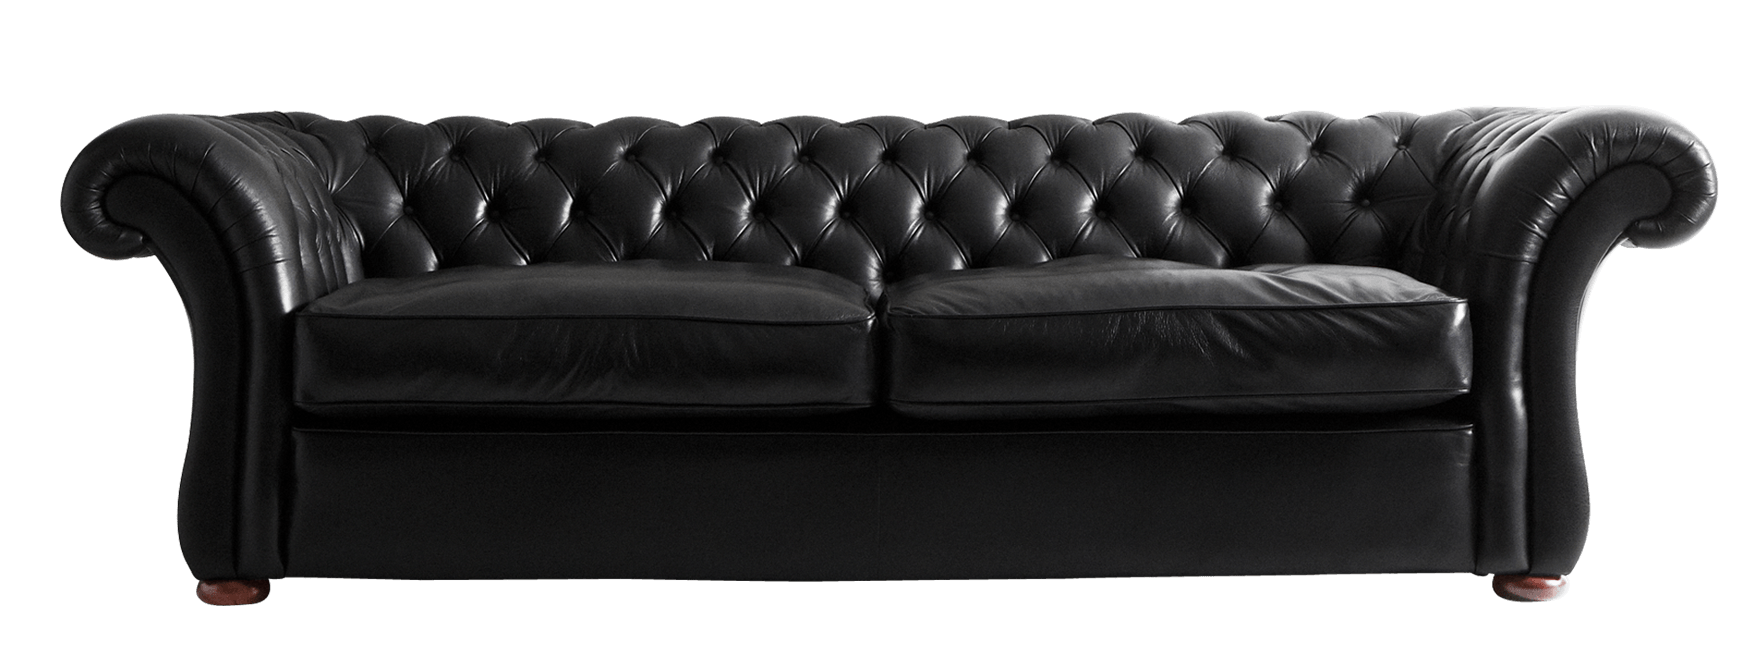 Sofa Transparant Beeld